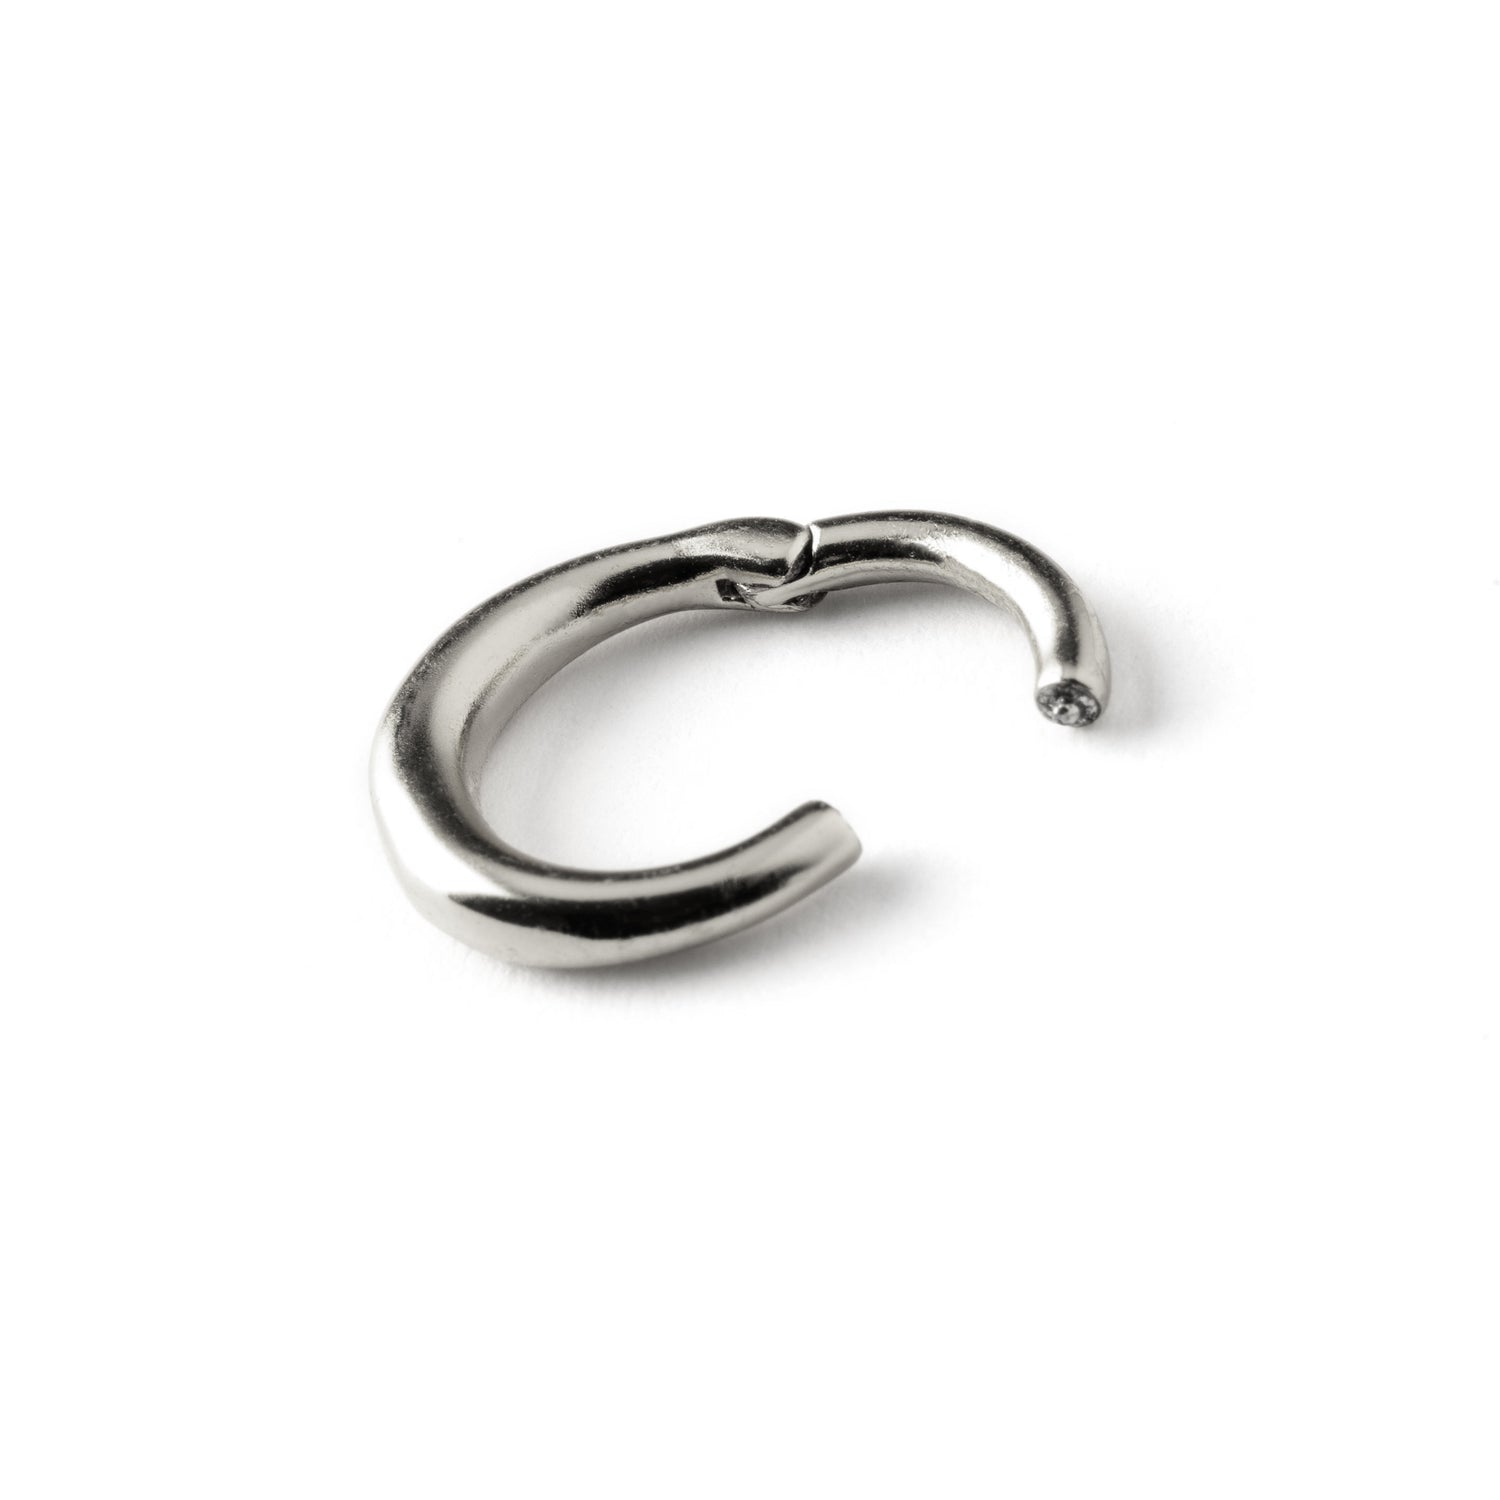 Raja surgical steel septum clicker ring hinged segment view